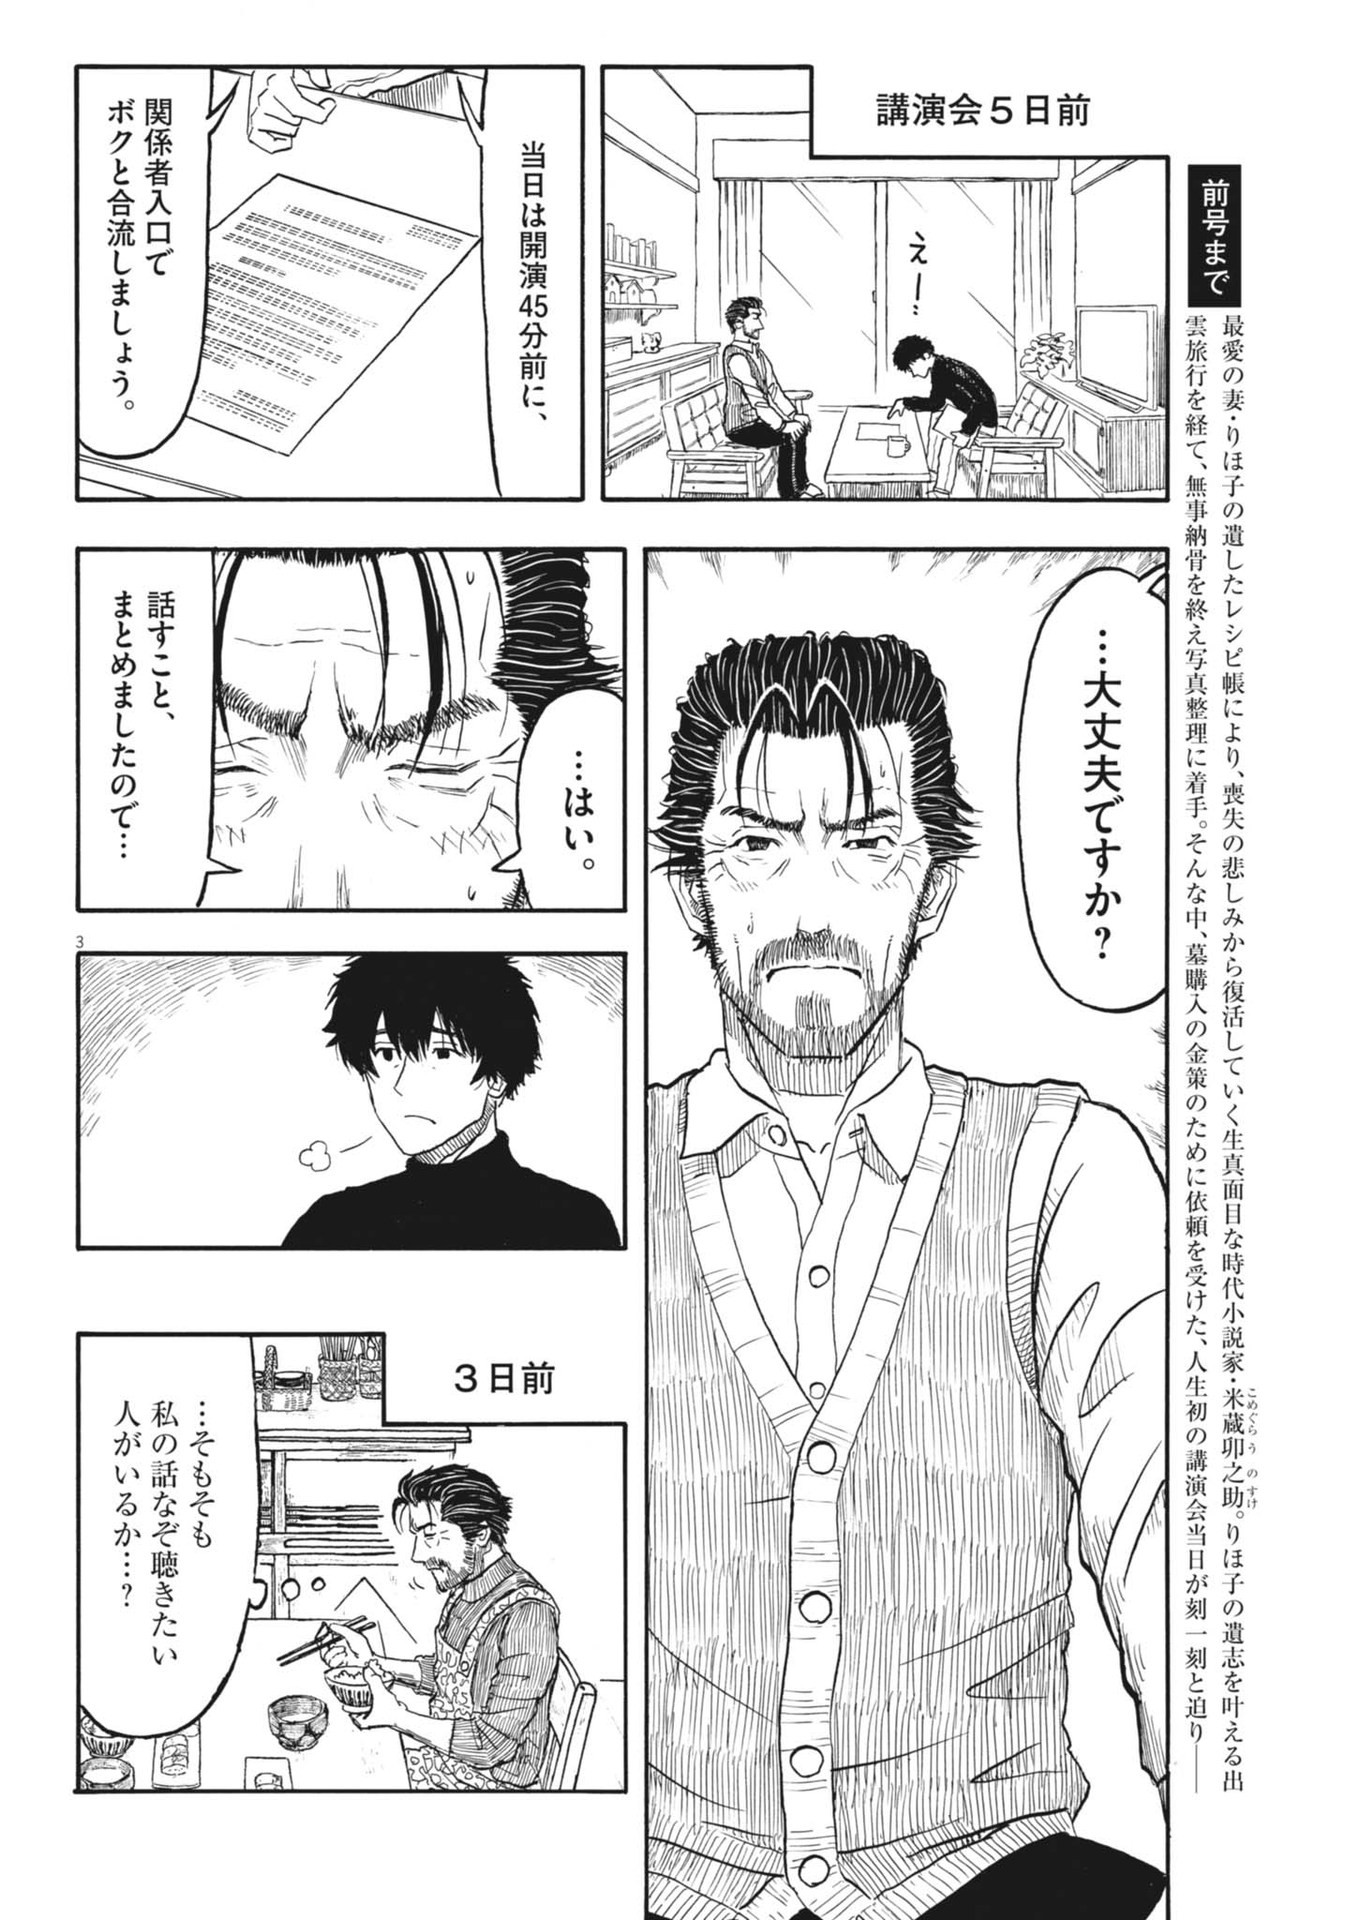 Komegura Fuufu no Recipe-chou - Chapter 40 - Page 3